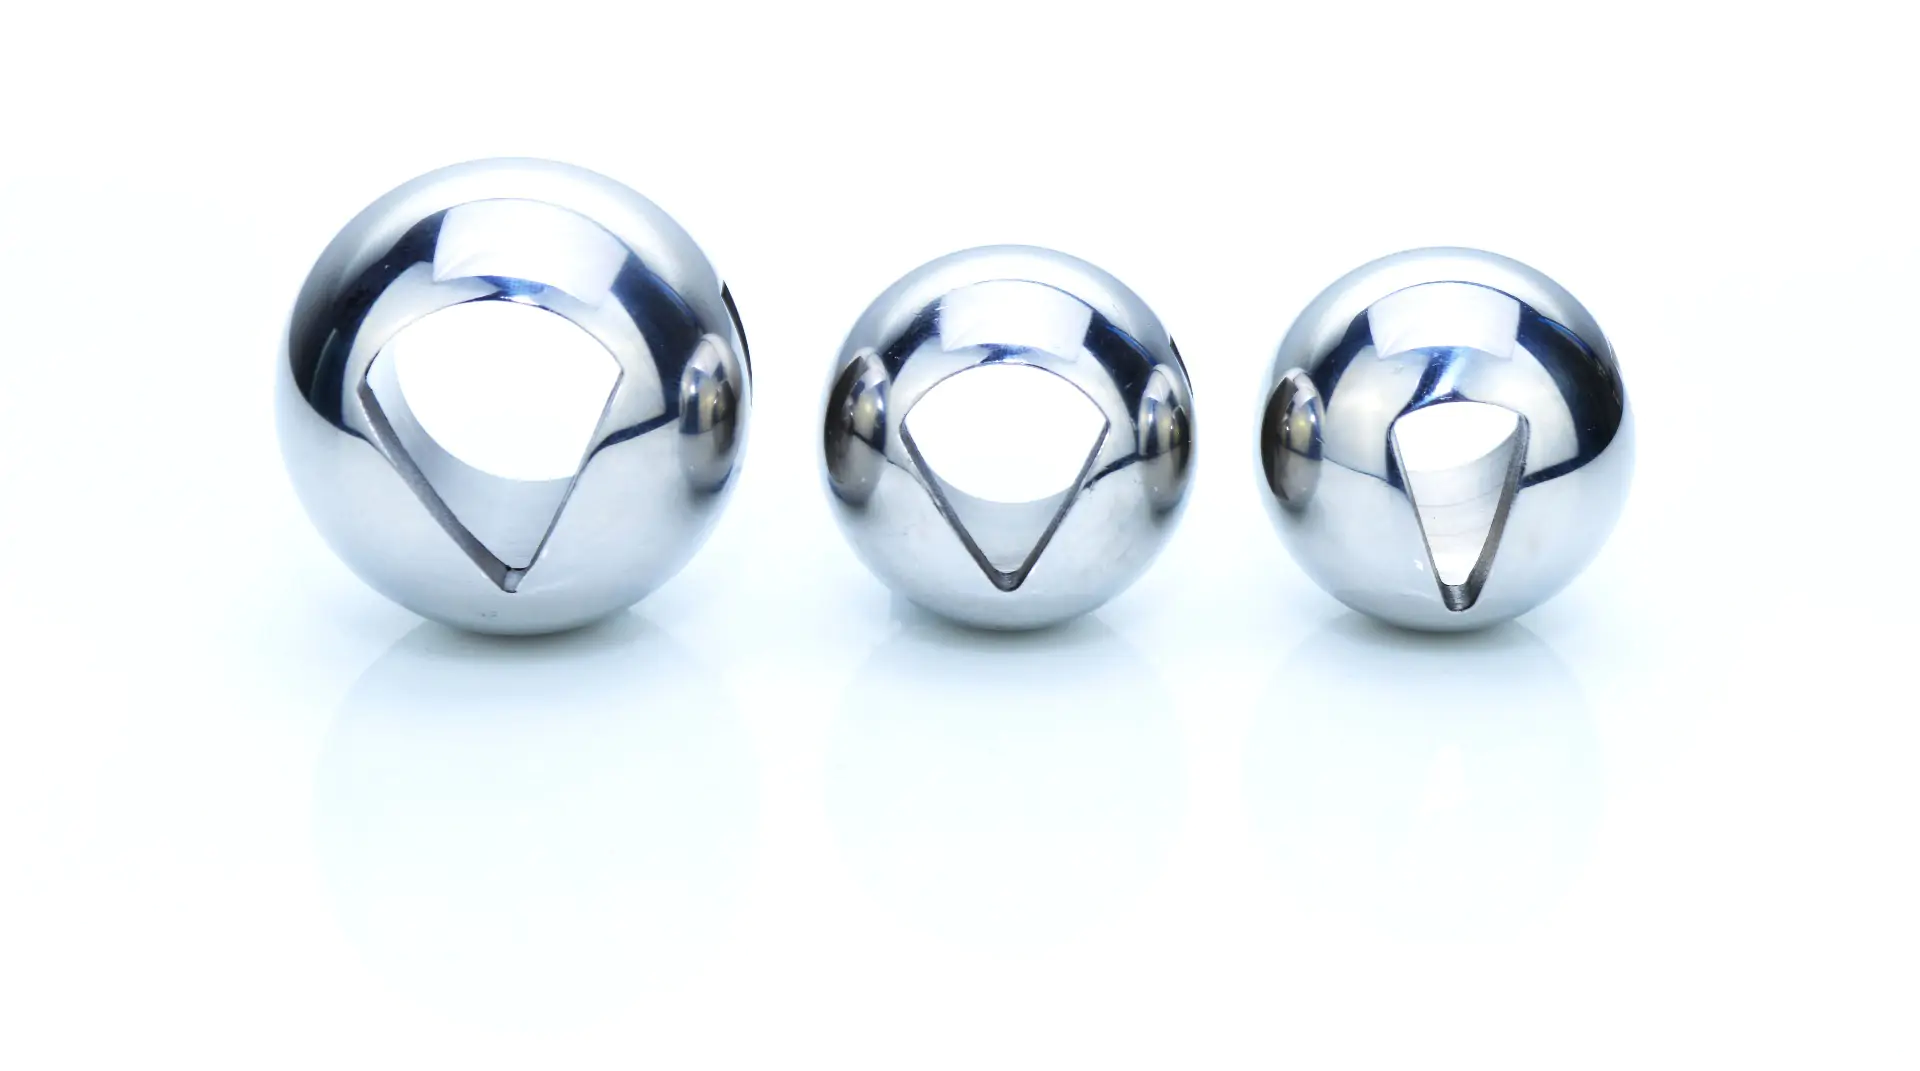 V-sector balls from a ball valve